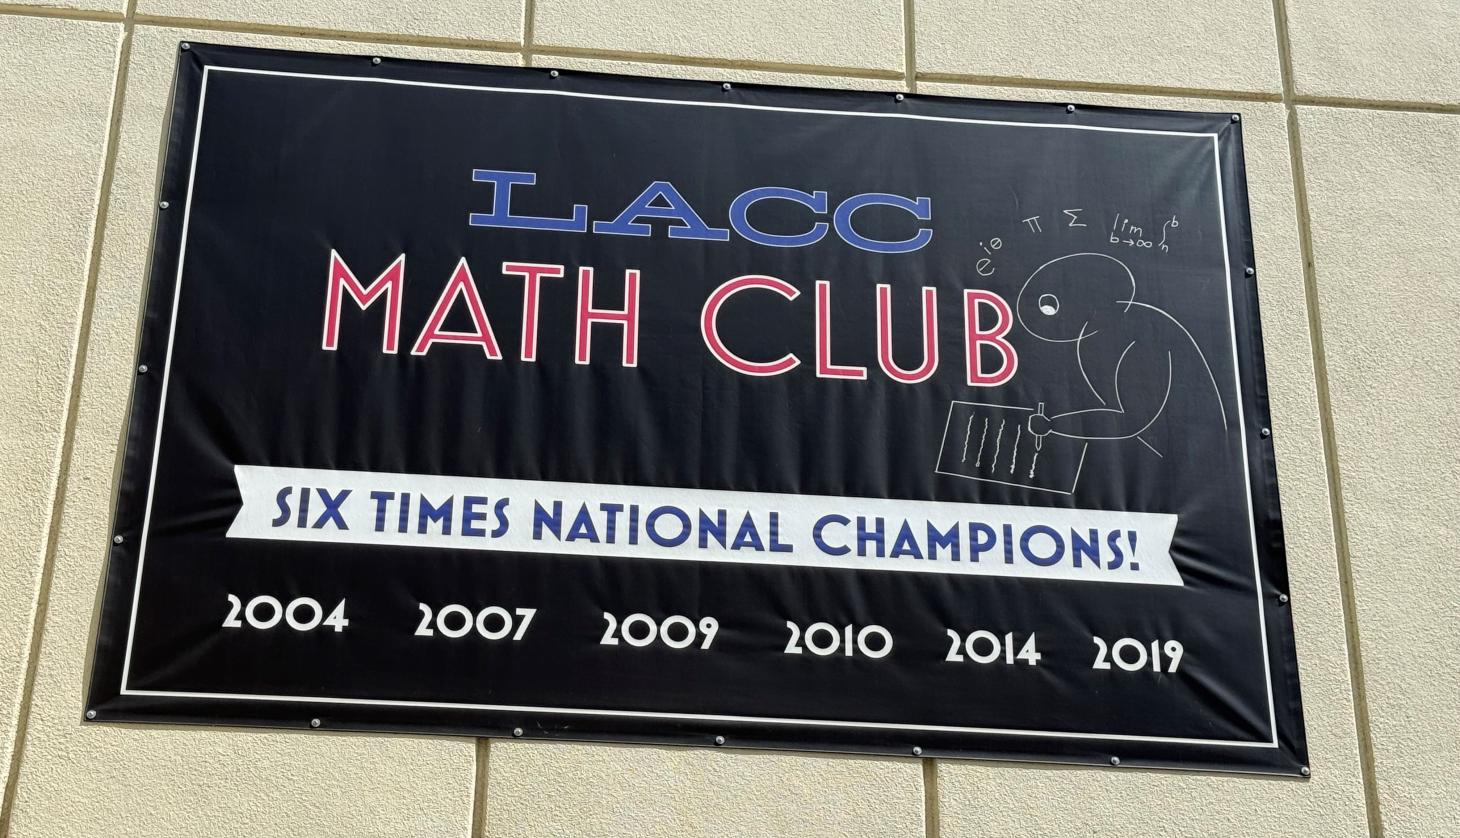 Image of LACC Math Club Championship Years.